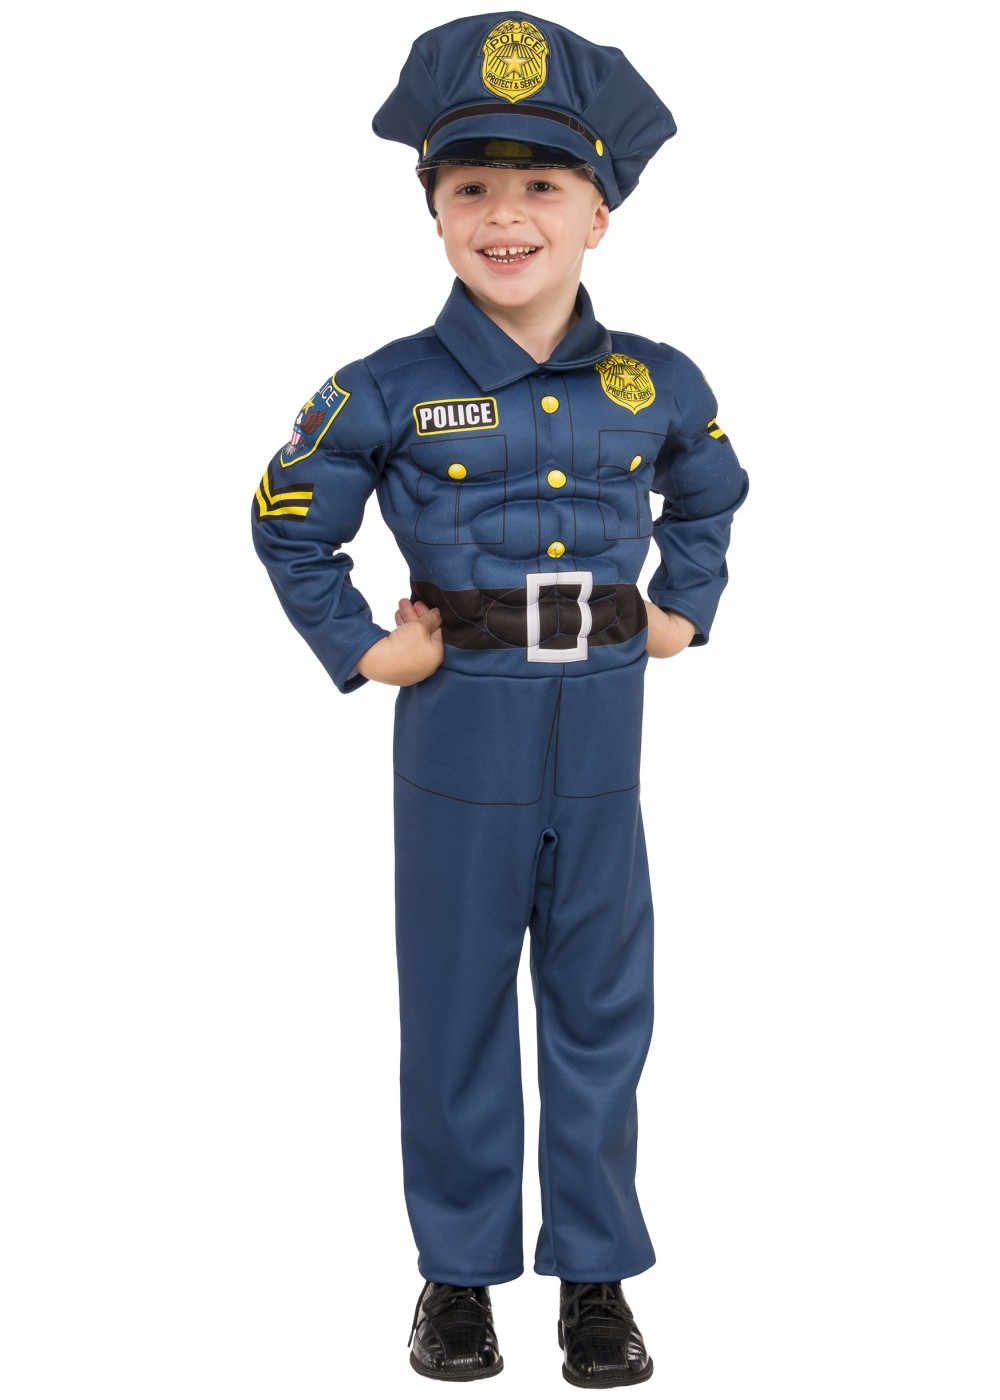 Cop Boys Costume - Professional Costumes